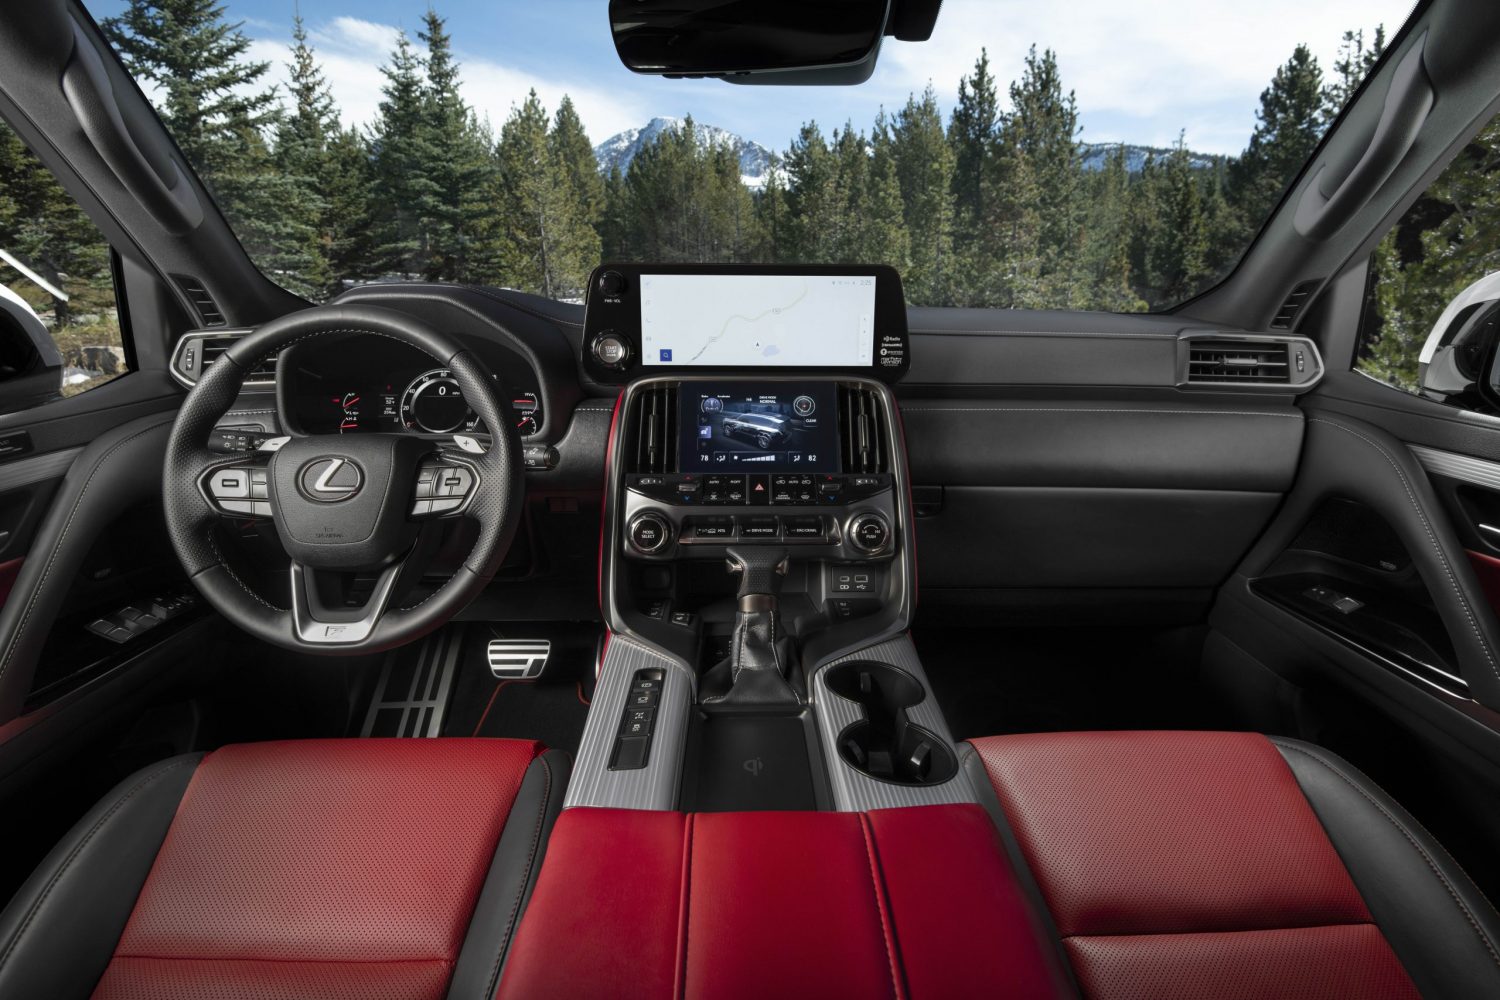 2023-lexus-lx-adds-heated-steering-wheel-as-standard-base-trim-level-starts-at-89160-3.jpg